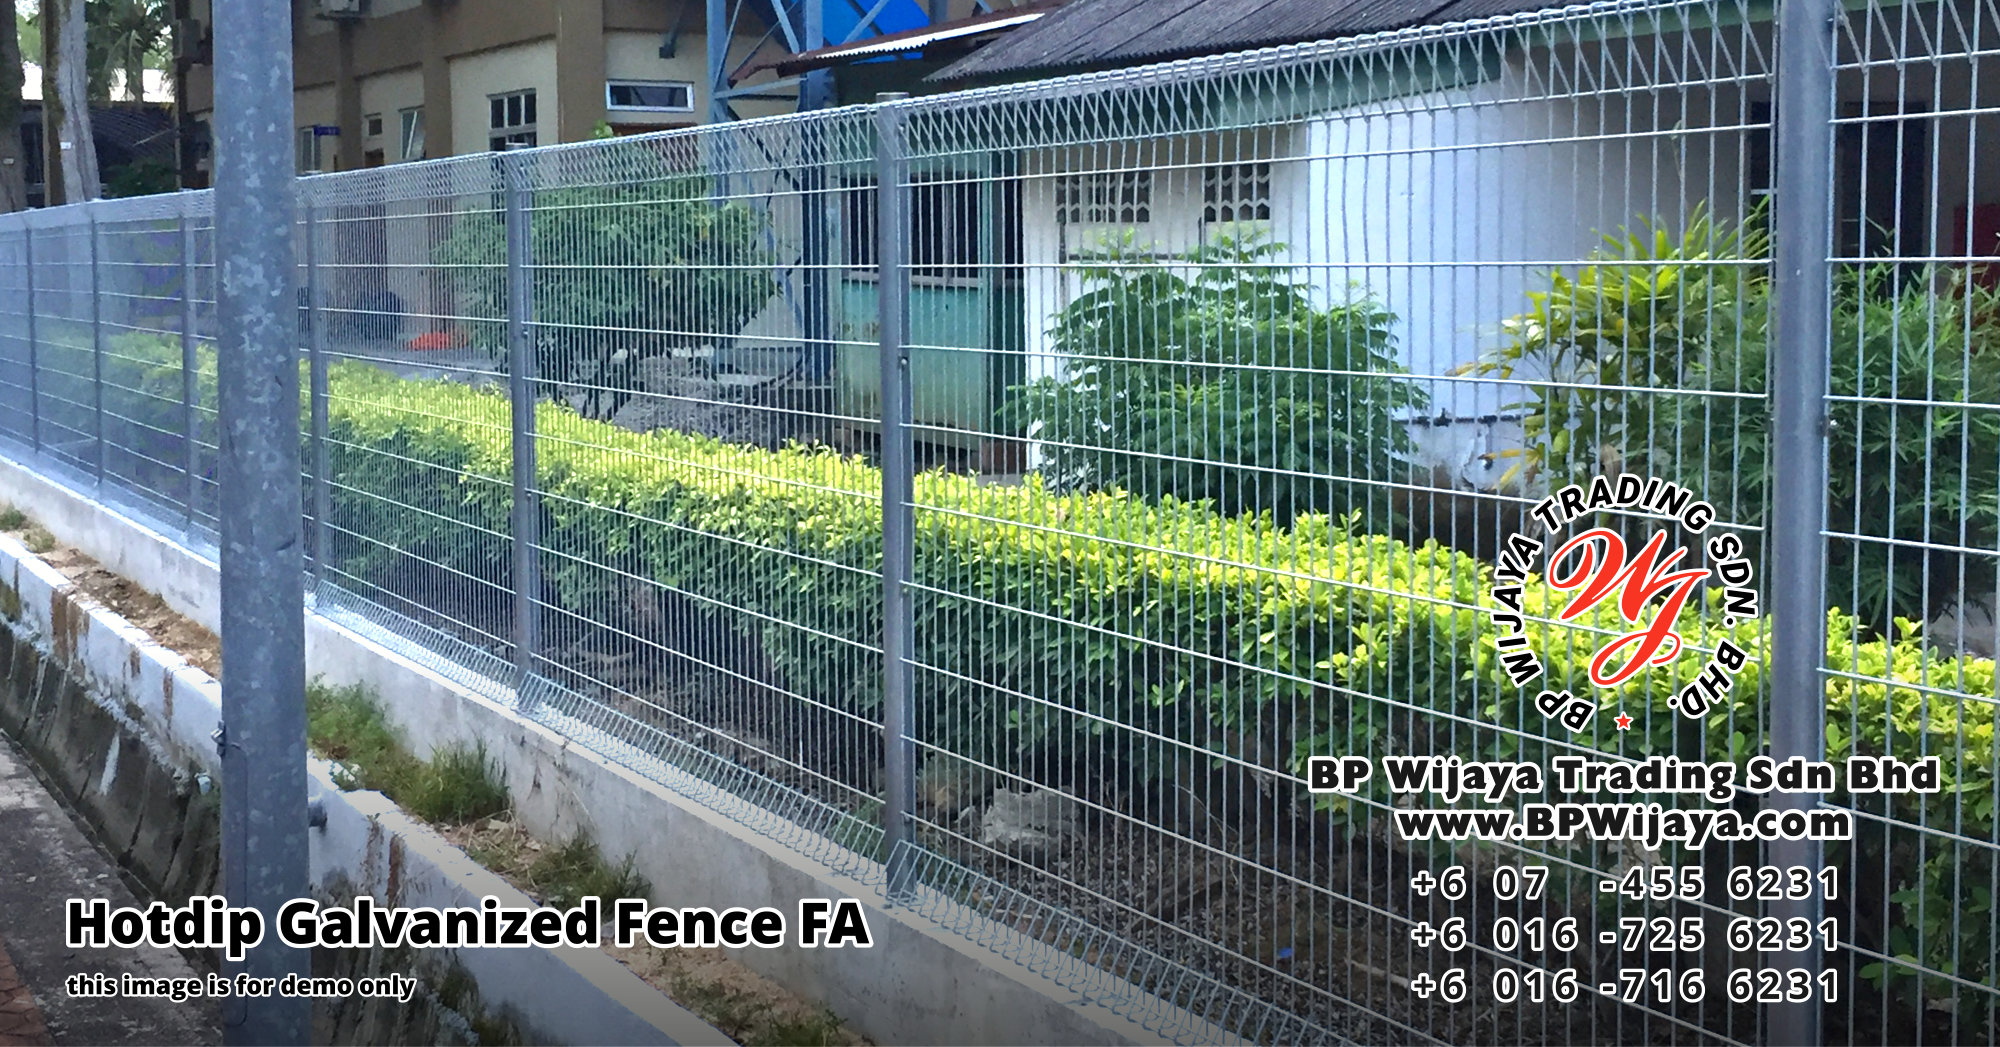 BP Wijaya Security Fence Manufacturer Malaysia Hotdip Galvanized Fence FA Security Fence Kuala Lumpur Pahang Johor Fence Malaysia Fence Johor B00